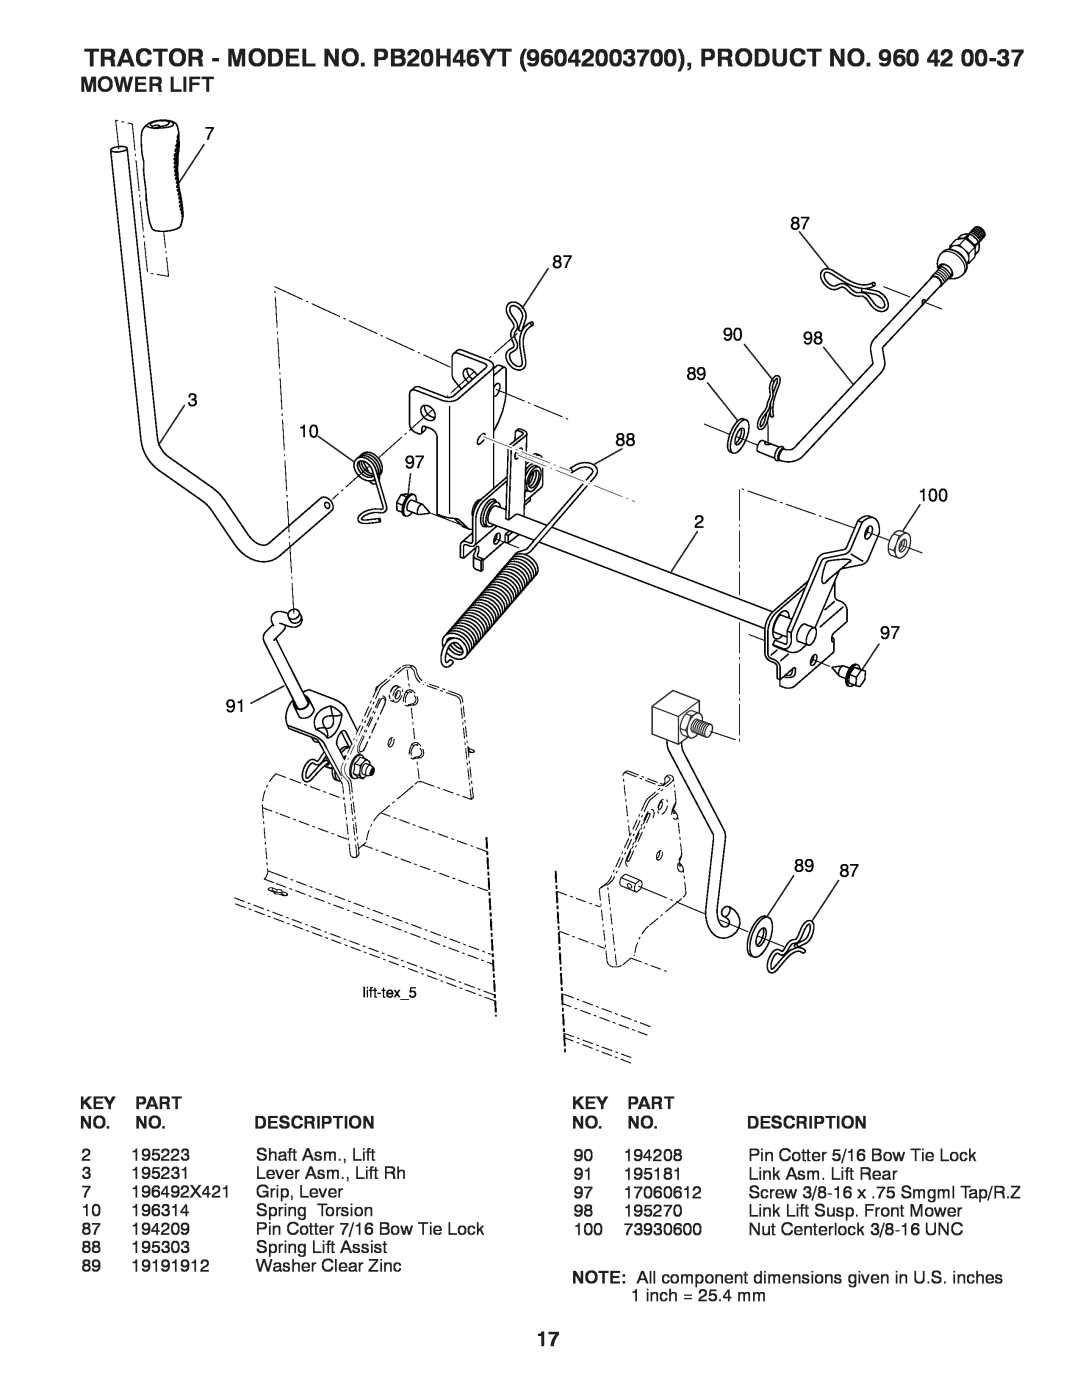 Poulan manual Mower Lift, 9098, TRACTOR - MODEL NO. PB20H46YT 96042003700, PRODUCT NO. 960 42, Part, Description 